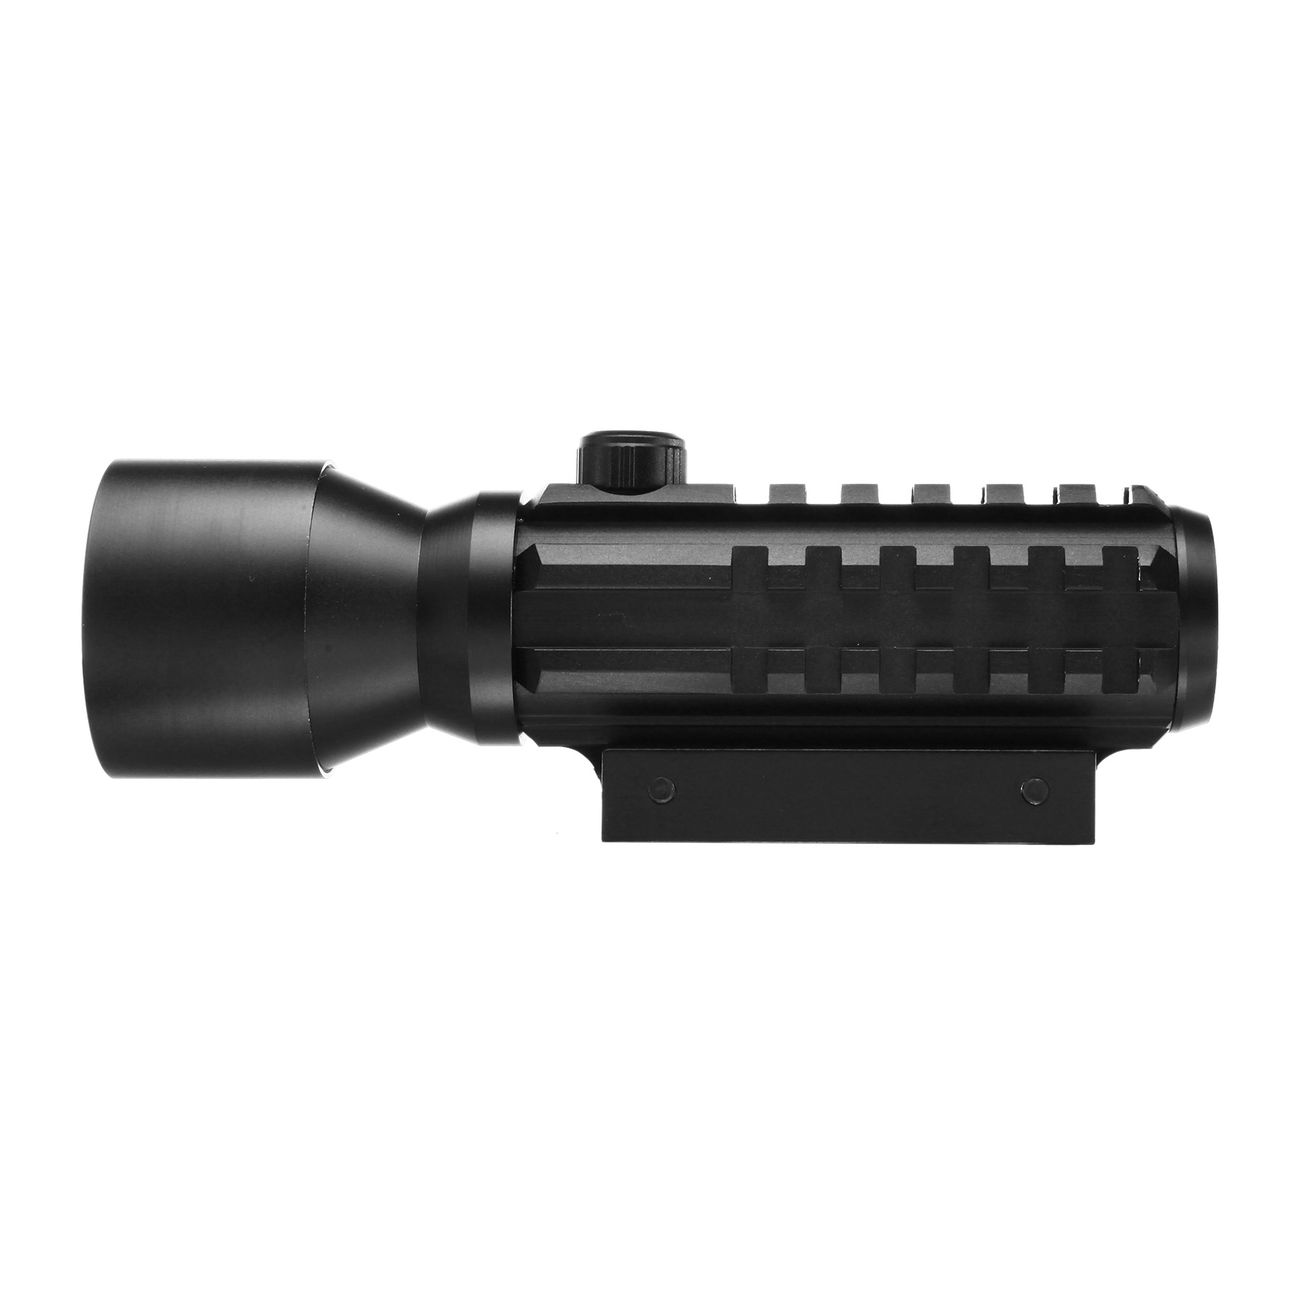 Aim-O 2x42 Red-Dot / Green-Dot Tactical Sight schwarz AO 3013-BK Bild 1